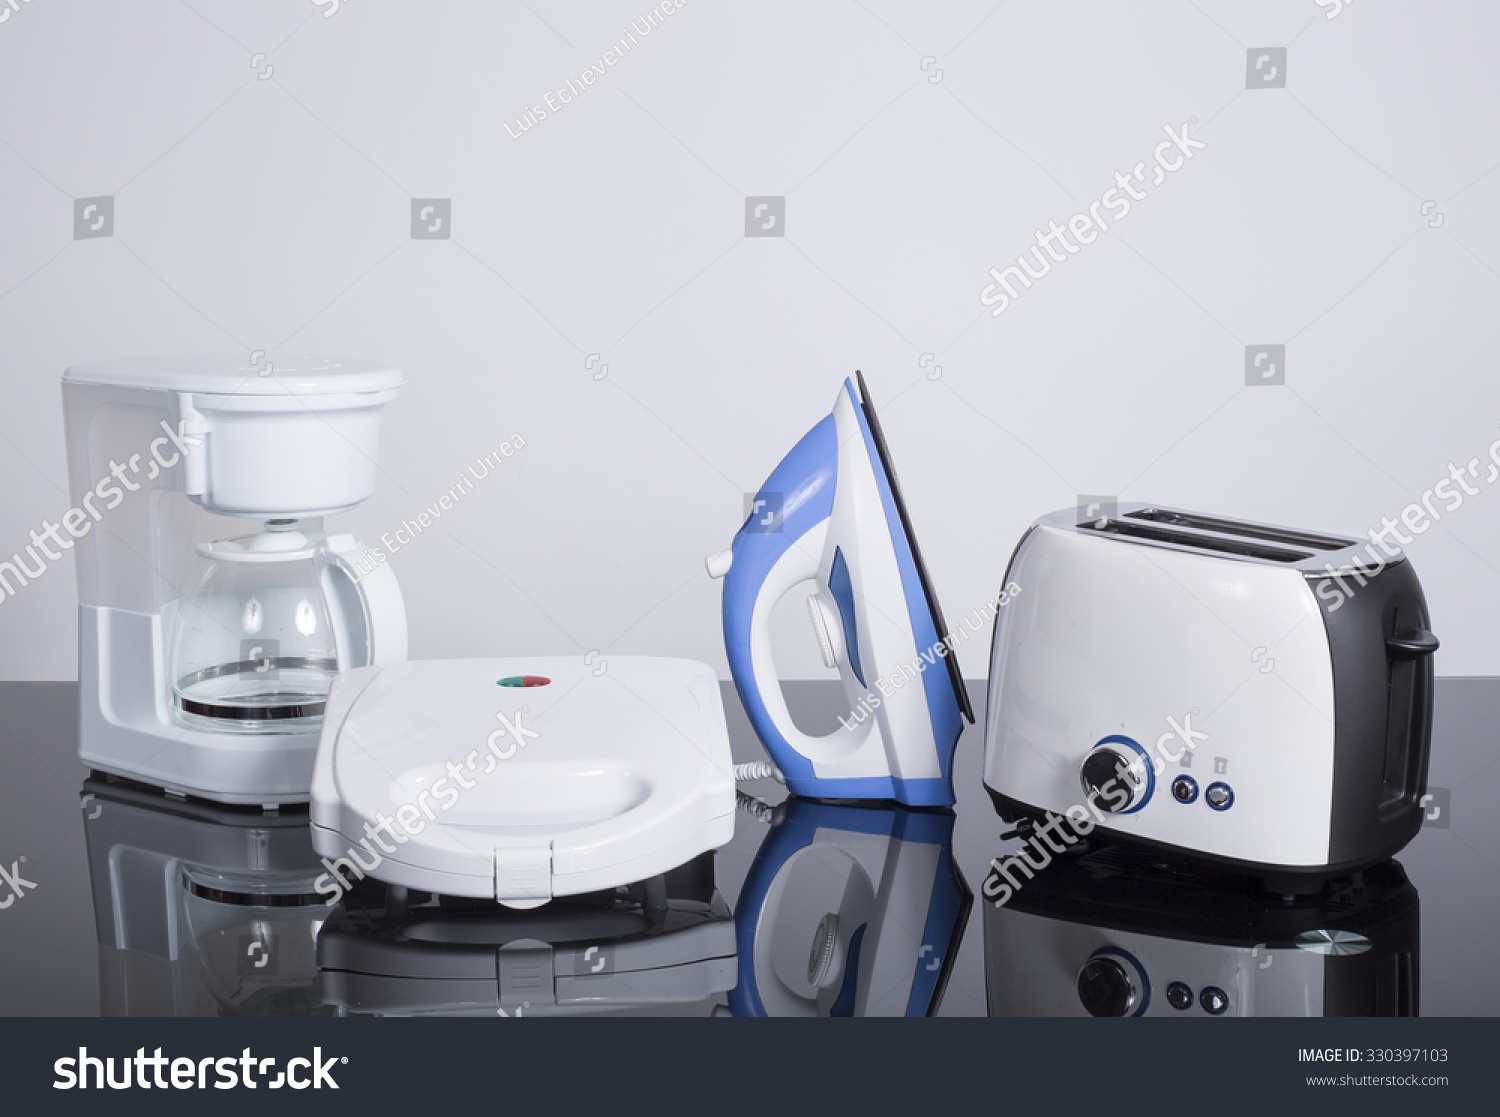 Kitchen Appliances on a neutral background #330397103